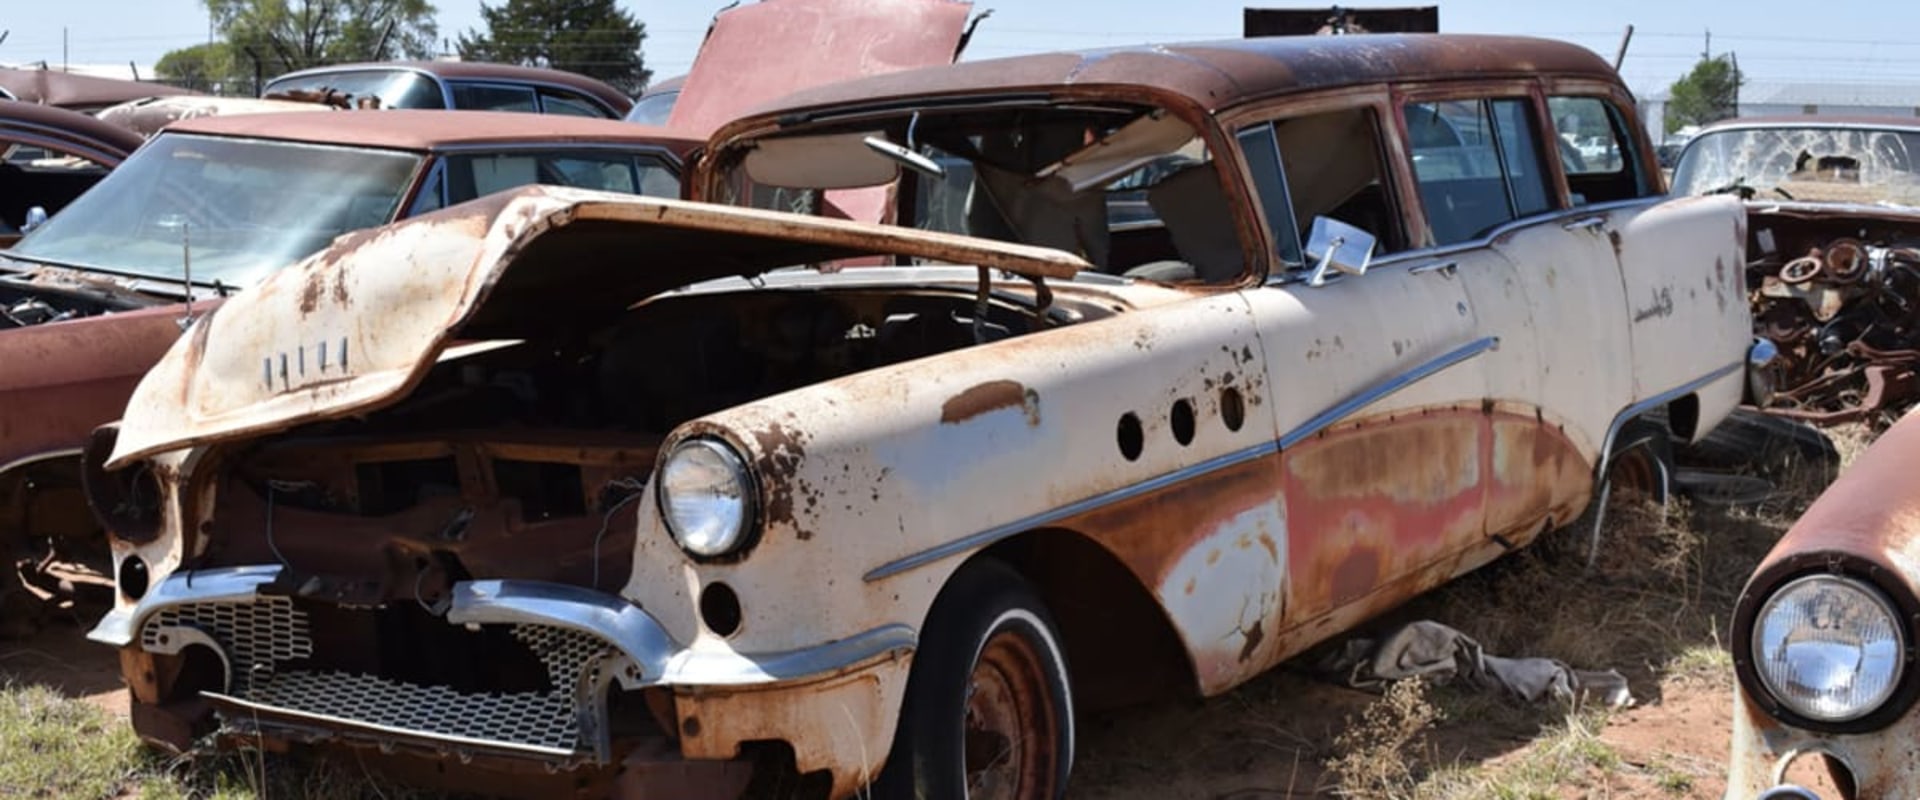 Vintage Car Restoration in Central Texas - Get the Best Services from Jerry Dixon's Automotive & Klassic Kar Center, Inc.